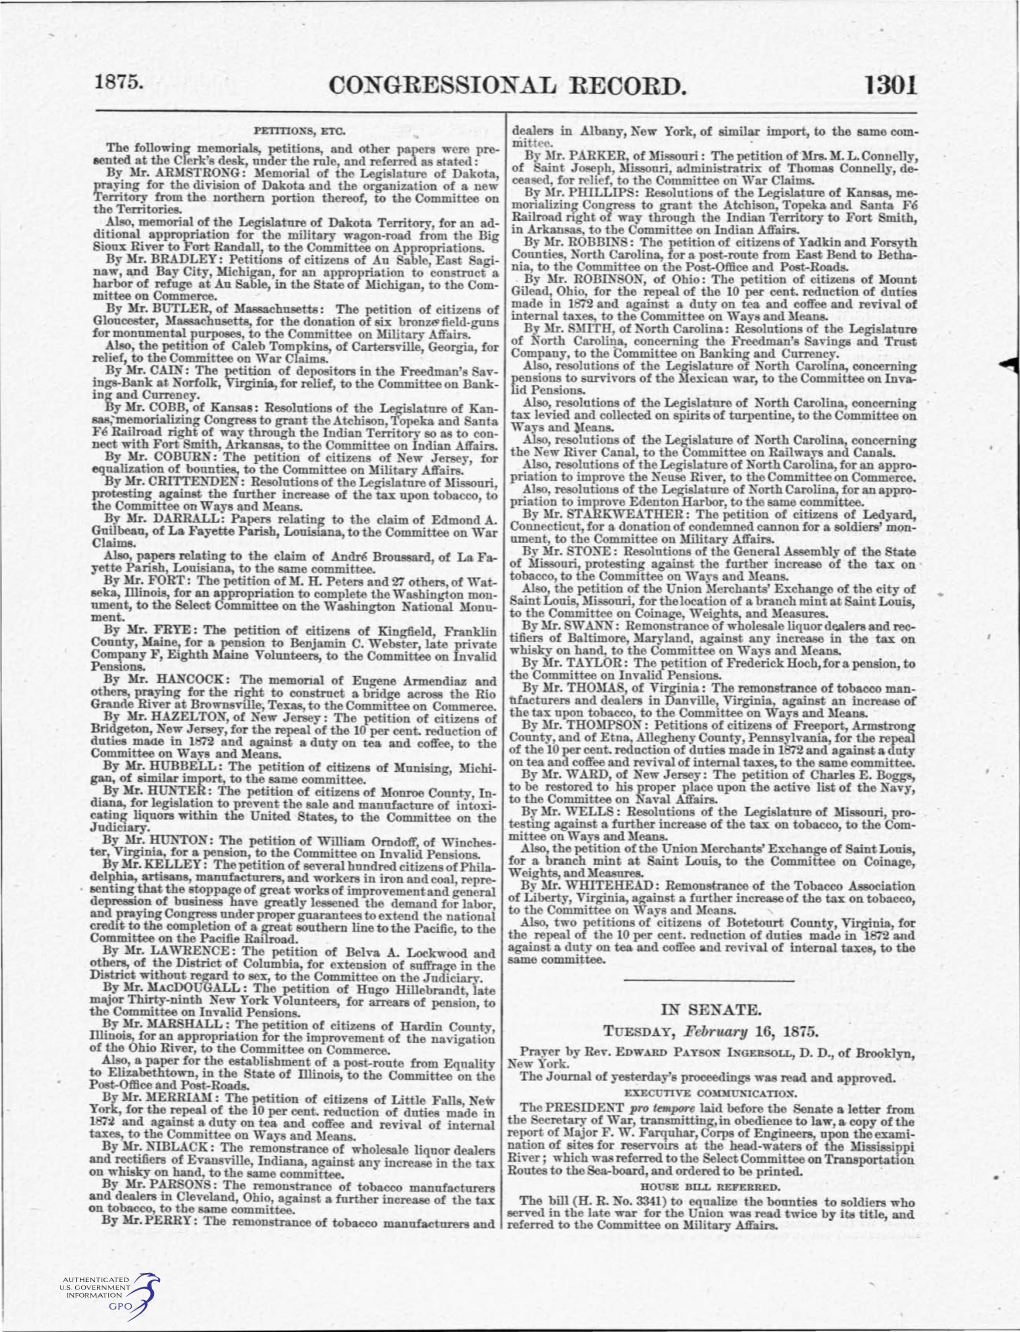 Congressional Record. 1301